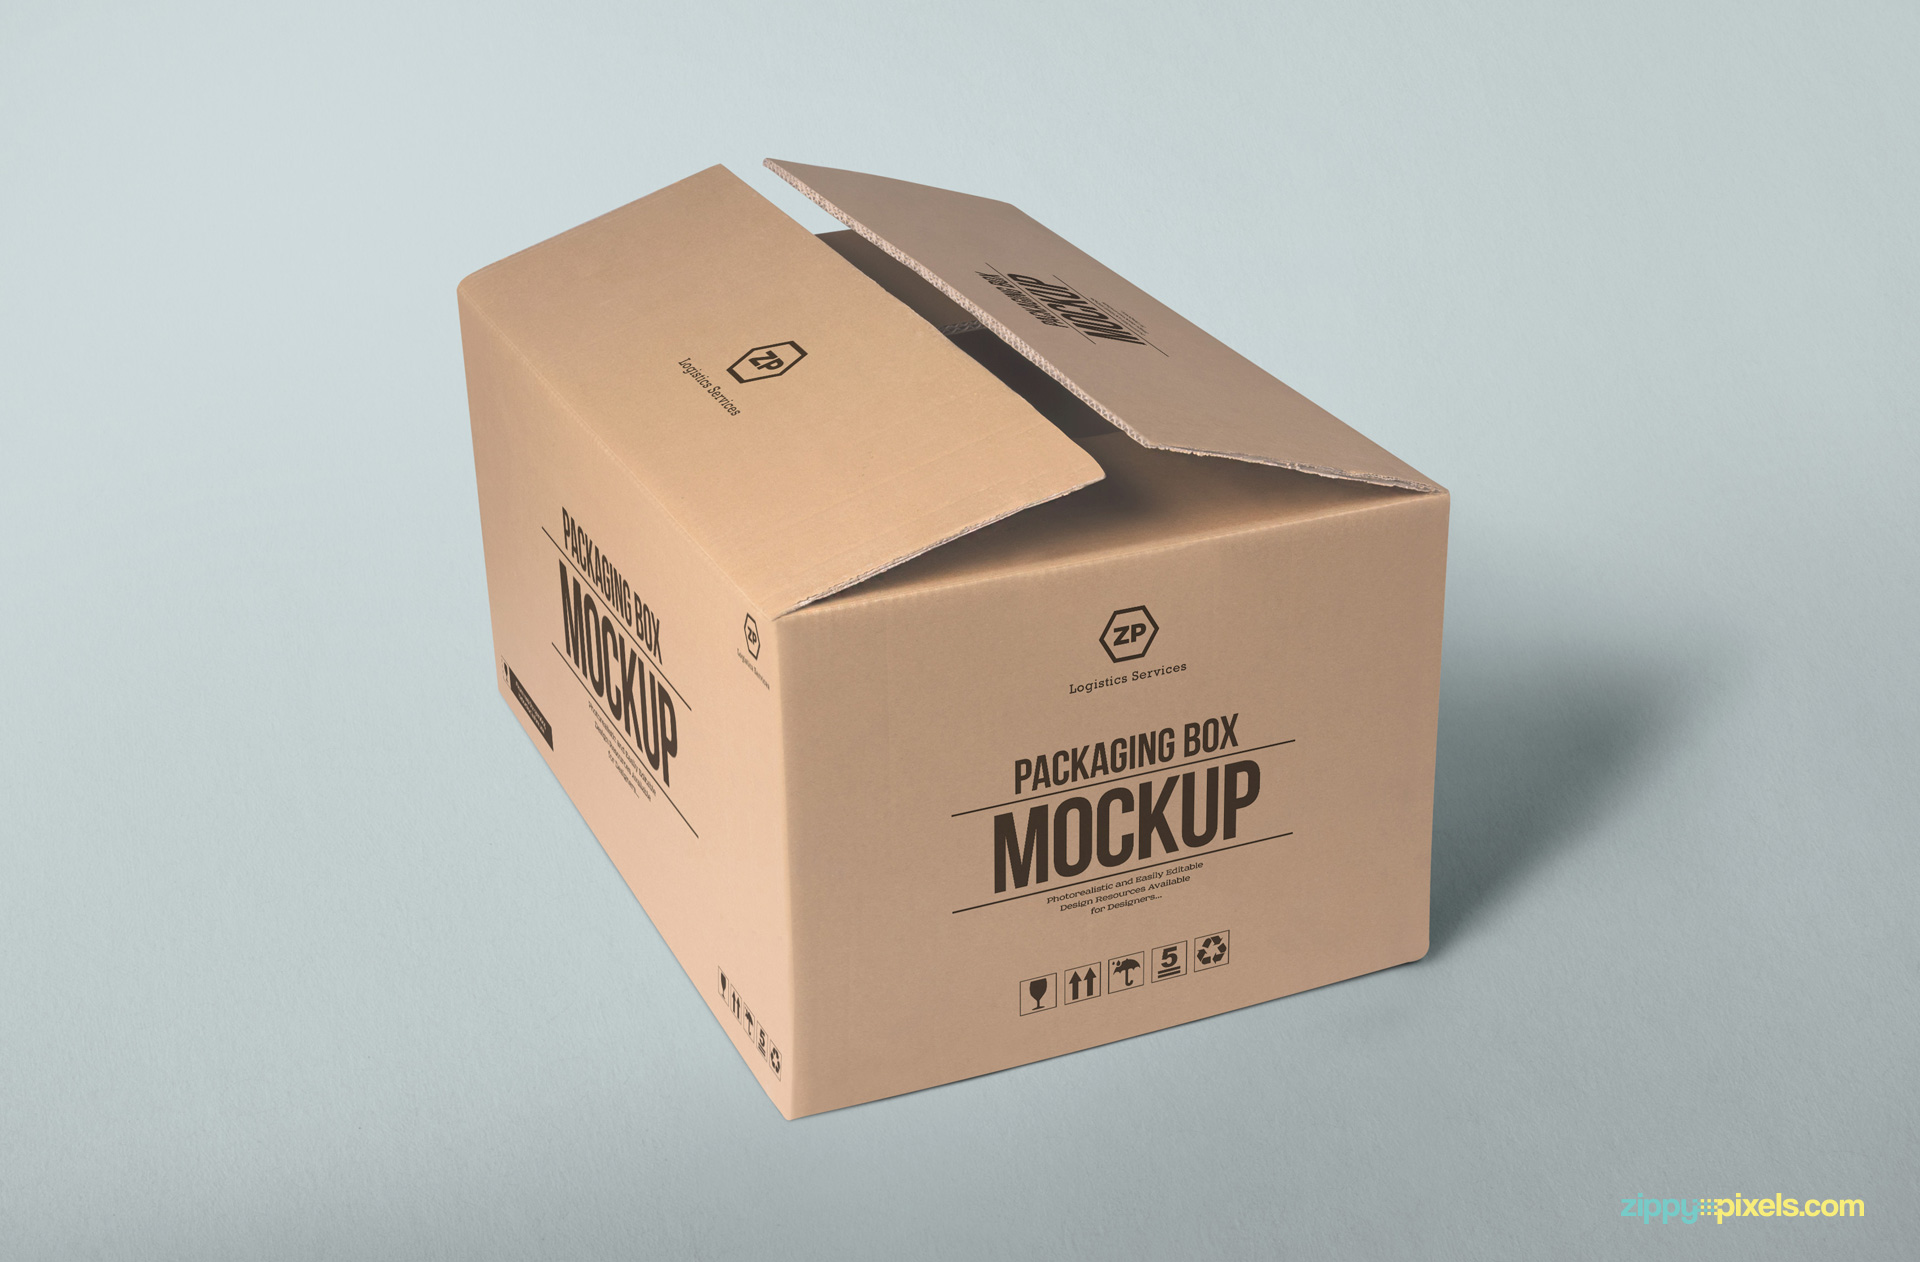 Free Packaging Box Mockup ZippyPixels